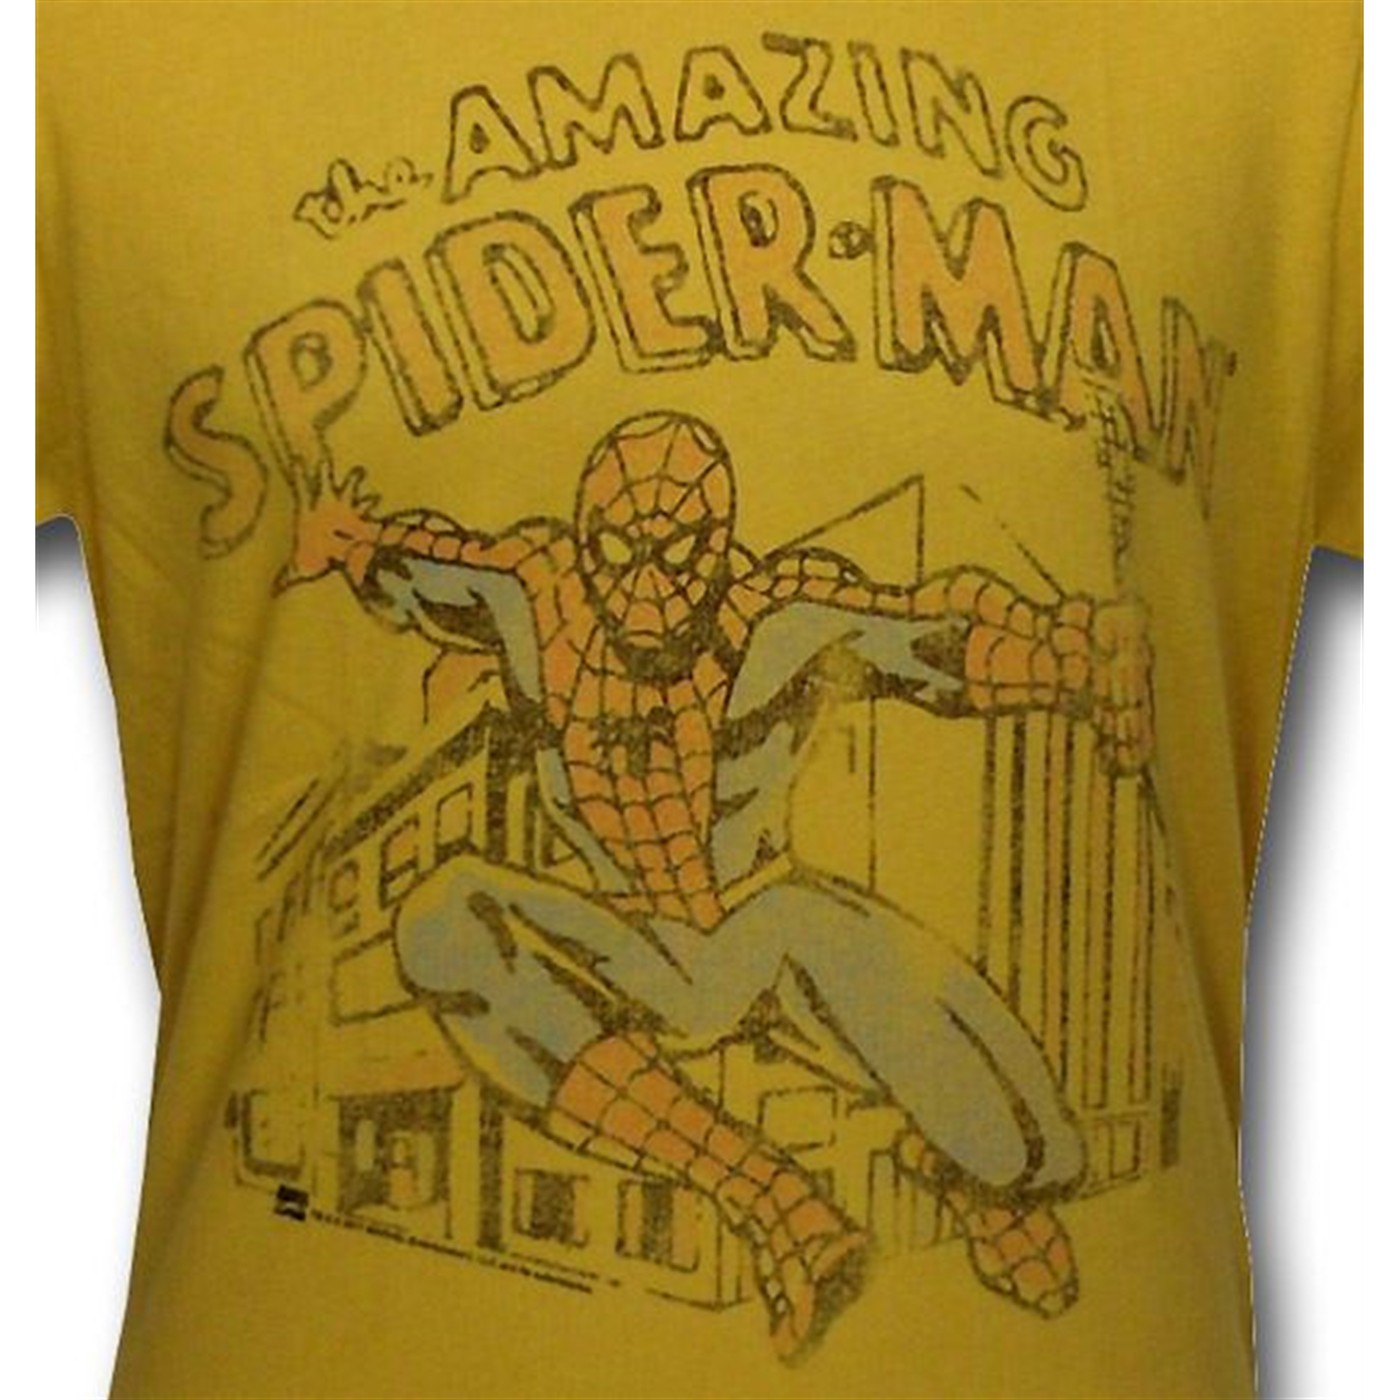 Spiderman Mustard Vintage Junk Food T-Shirt